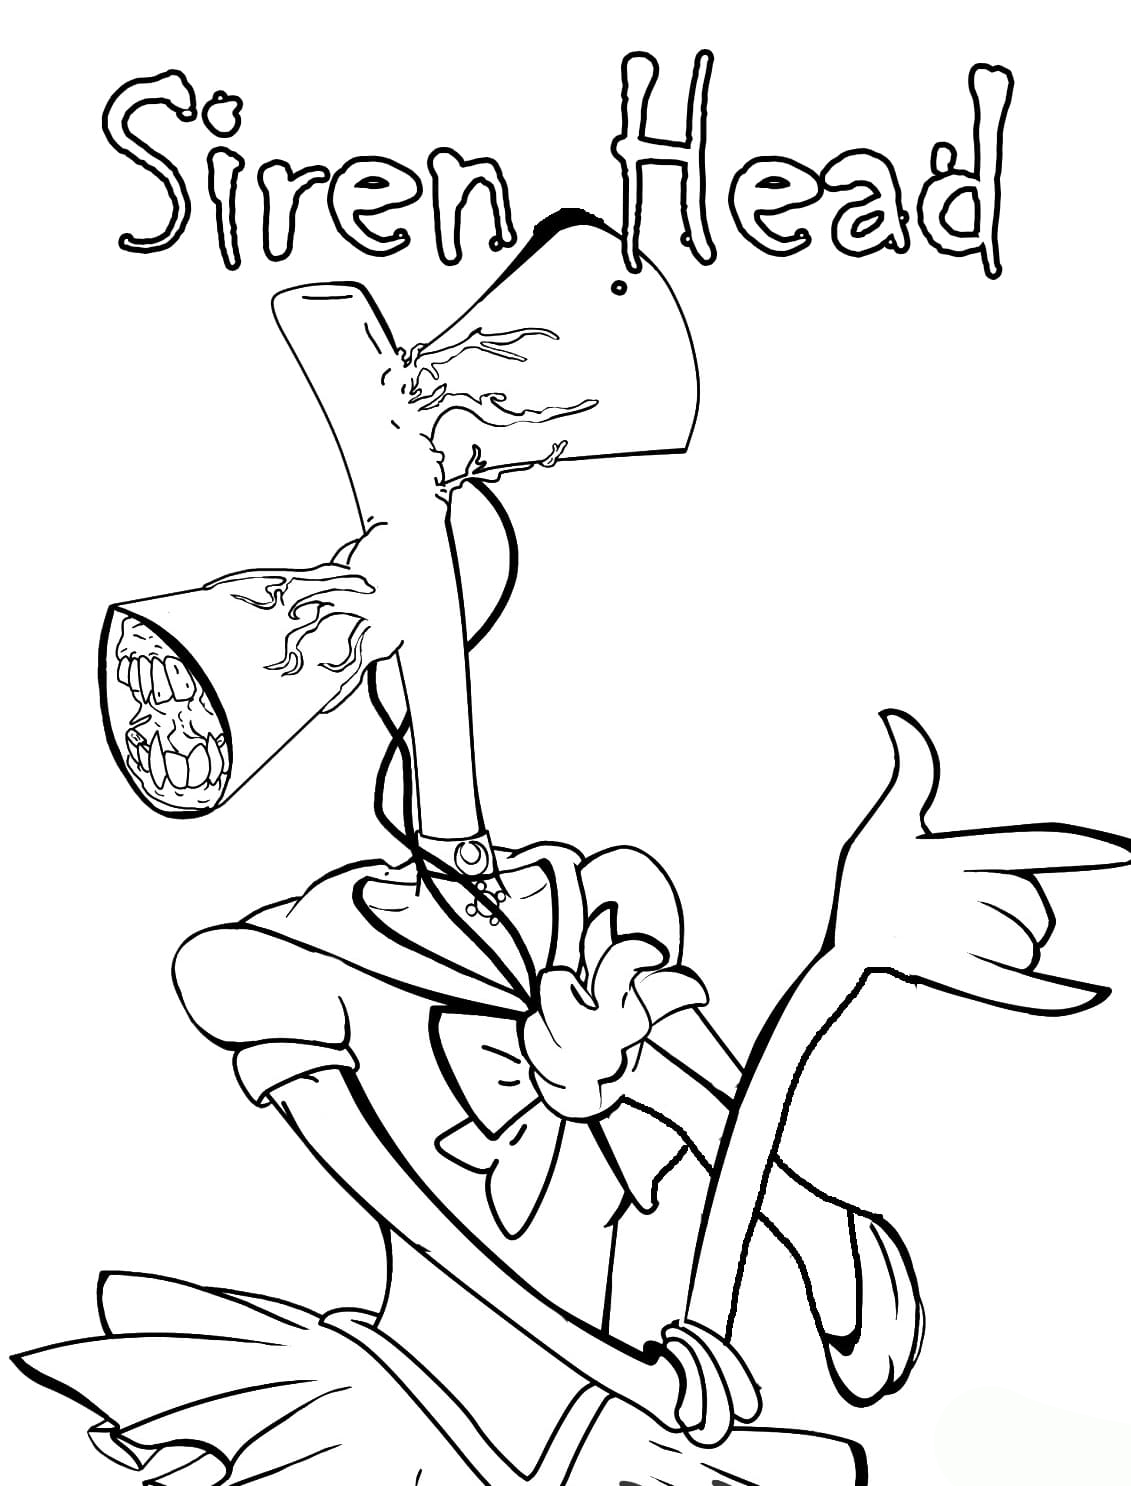 Ausmalbild Siren Head Im A4-Format